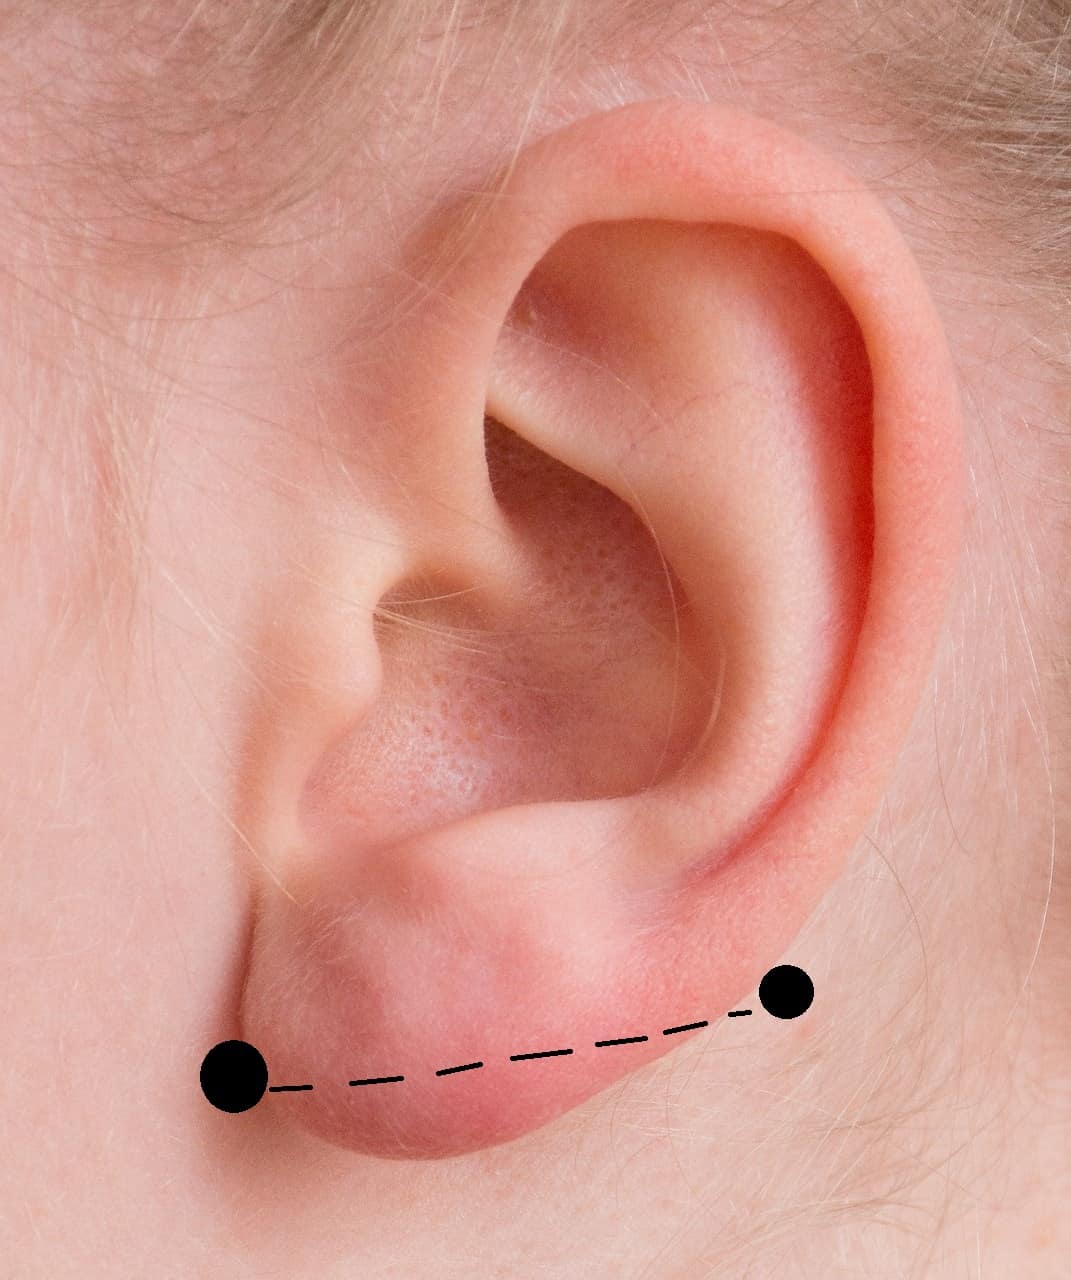 what is transverse lobe piercing?